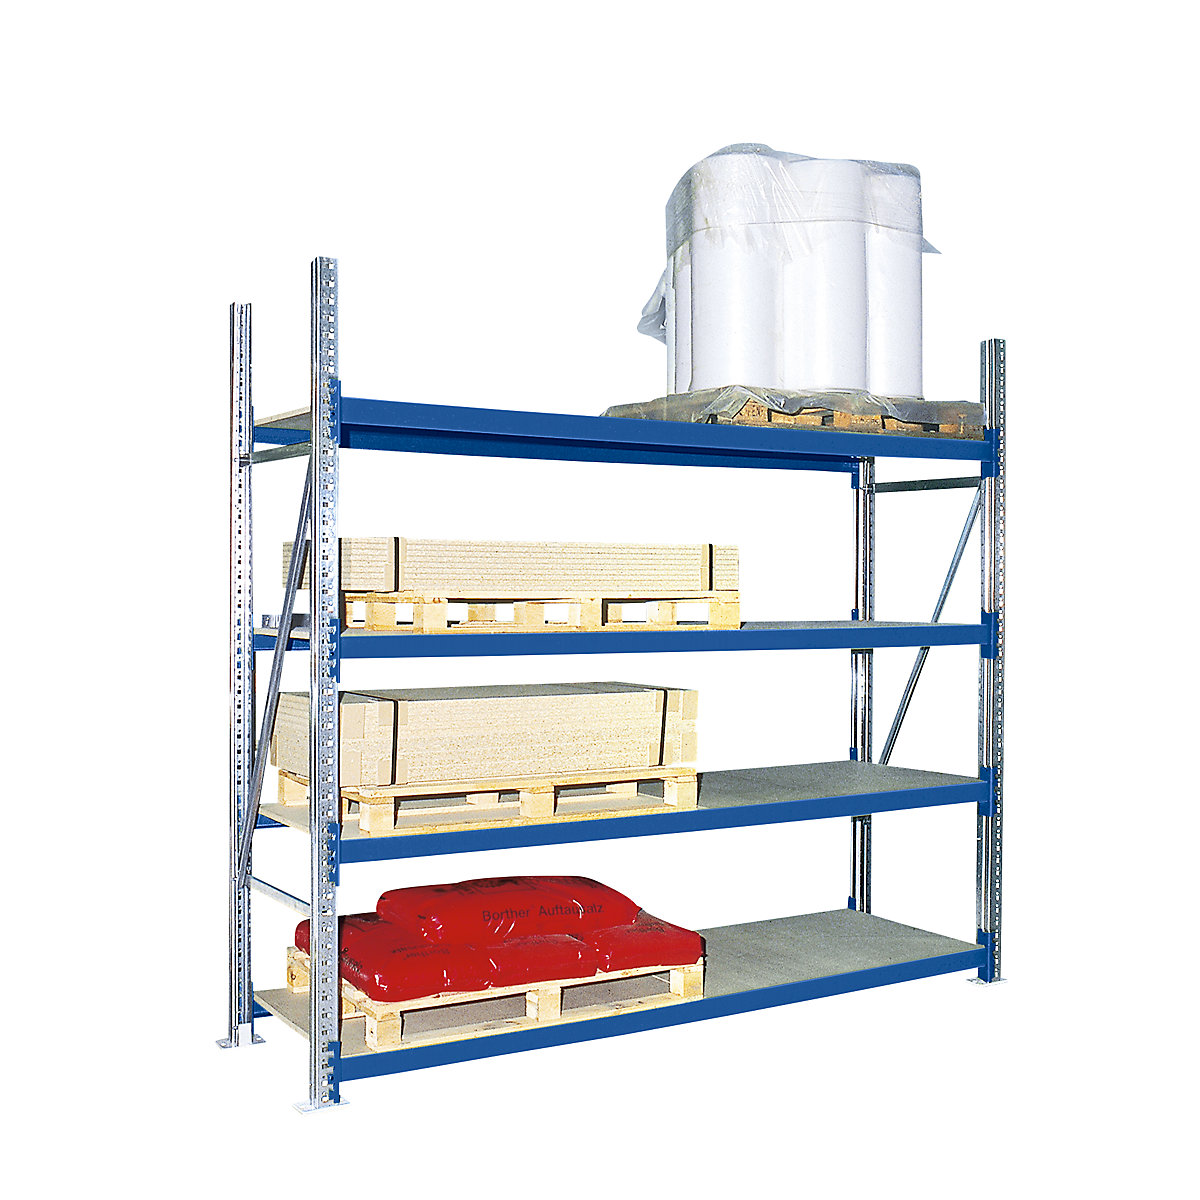 Wide span shelving unit with moulded chipboard shelves – eurokraft pro, depth 800 mm, cross beam length 2200 mm, height 2500 mm, standard shelf unit, blue RAL 5010